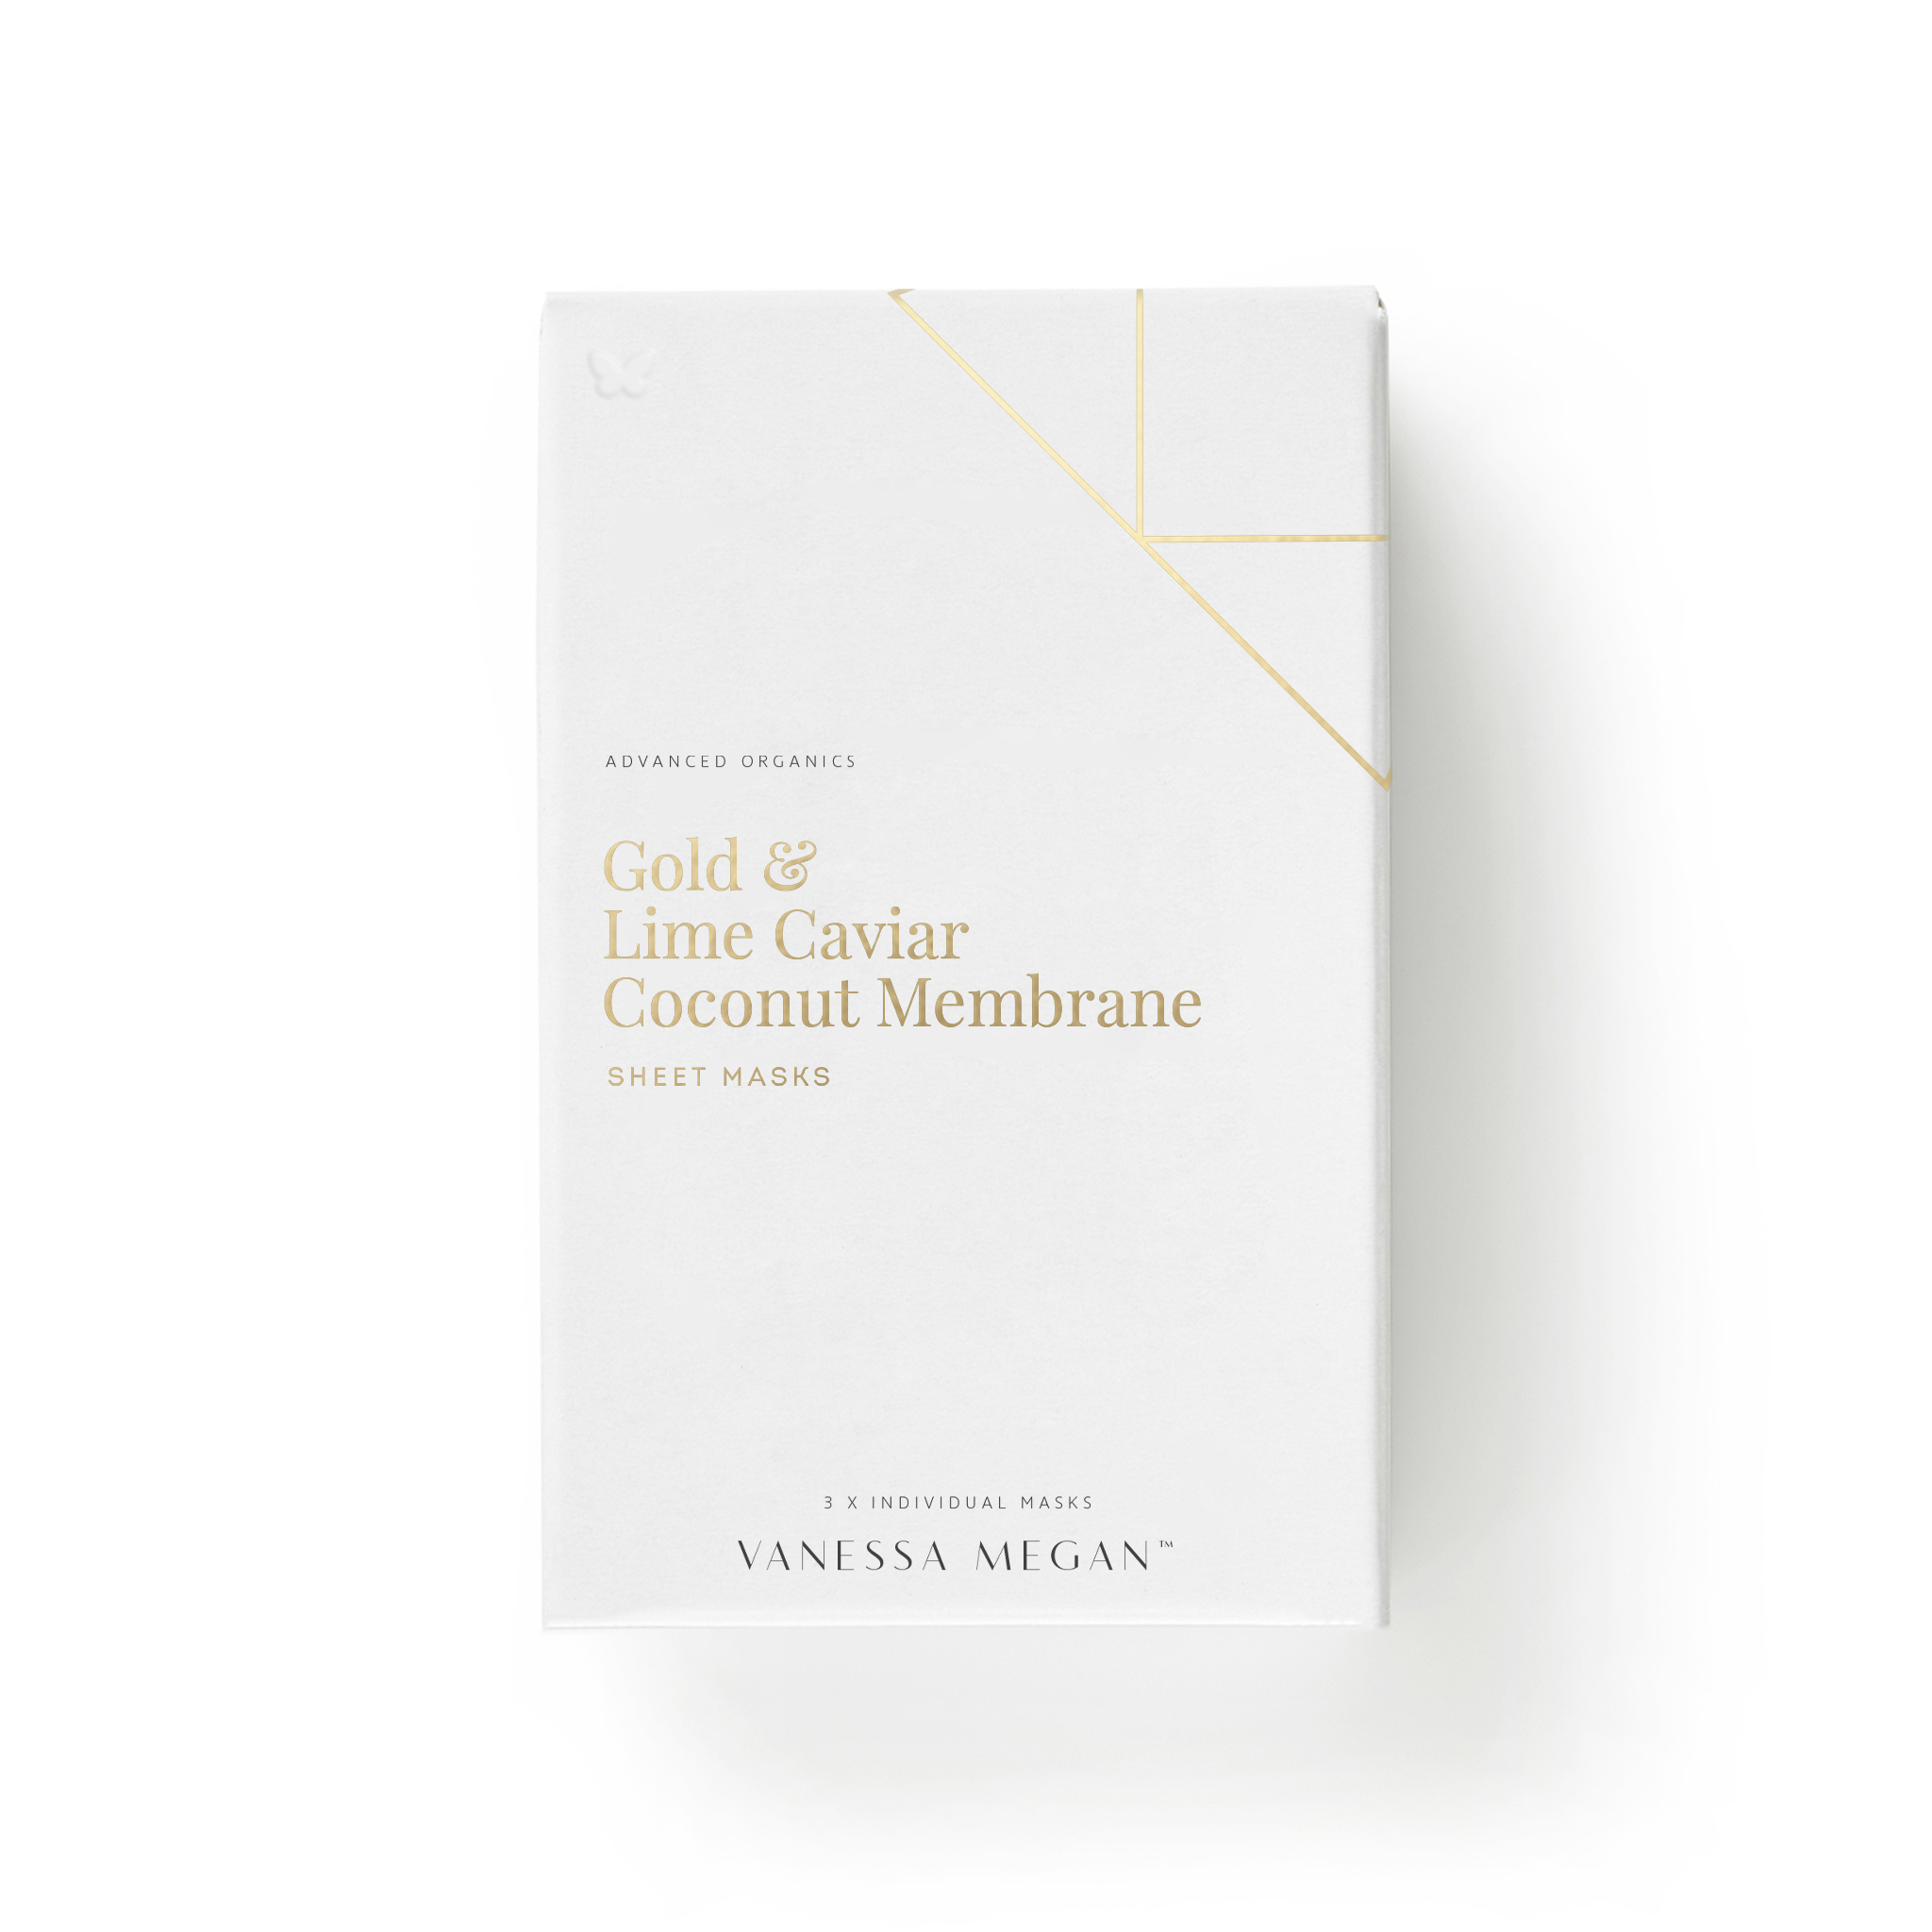 Gold & Lime Caviar Coconut Membrane Sheet Mask - 3 Pack